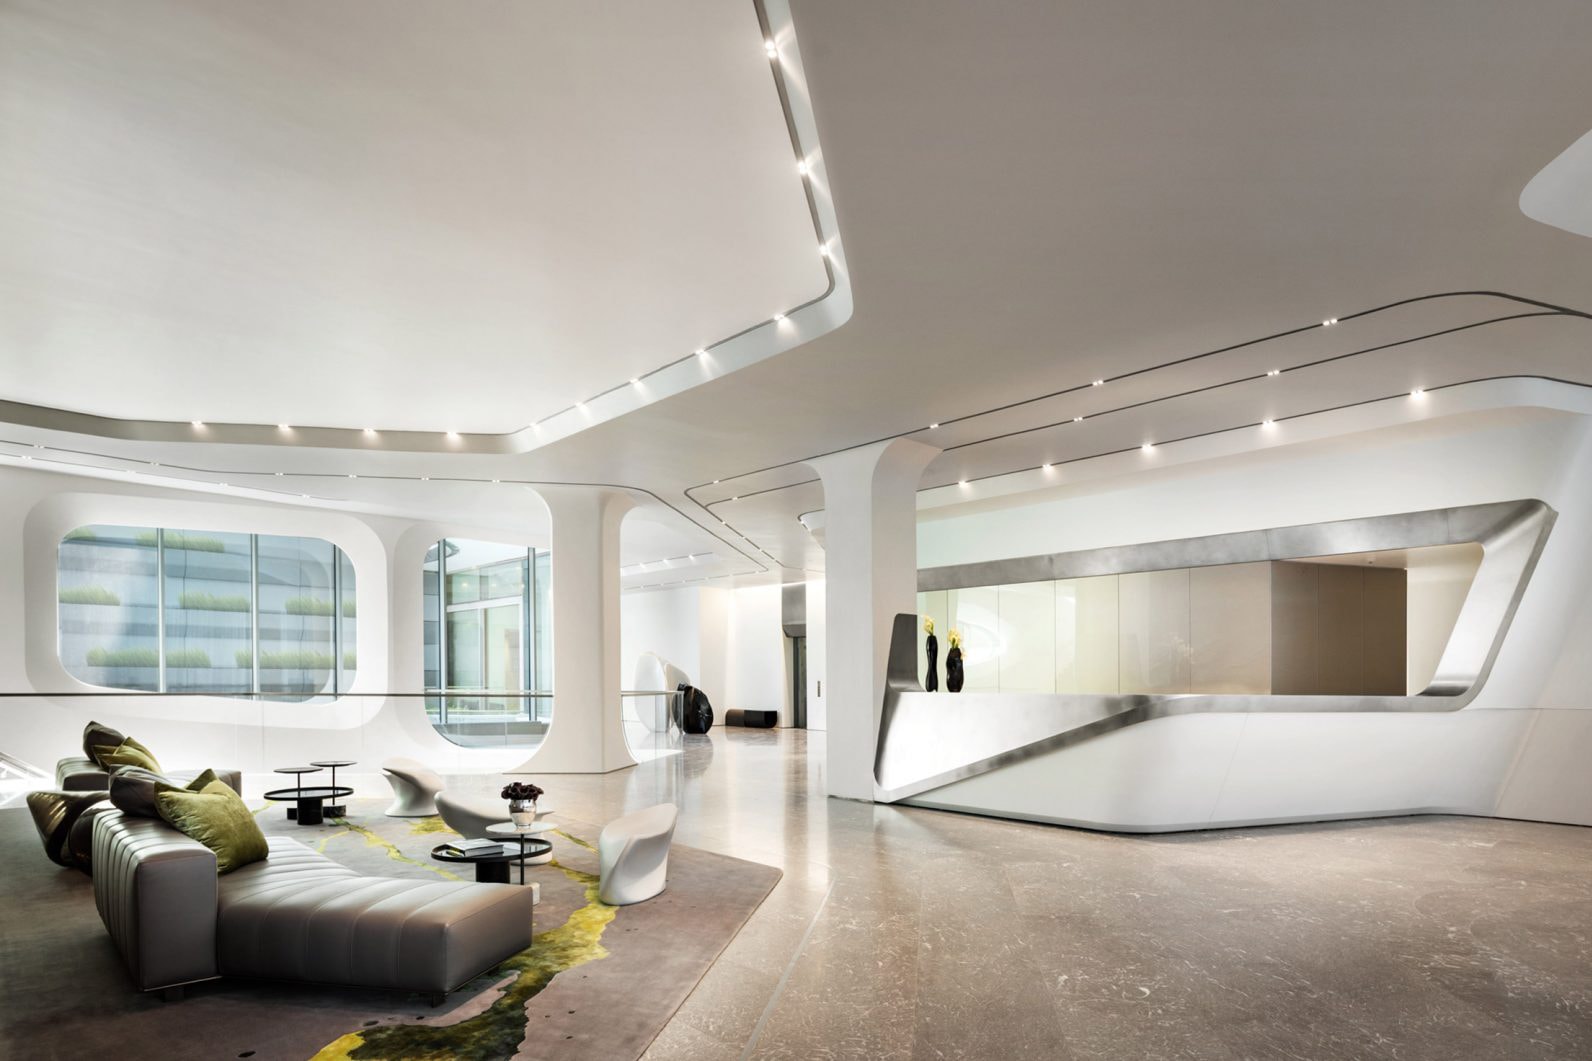 Zaha Hadid Architects New York City Condo Building High Line Park Architecture Design Interior Amenities